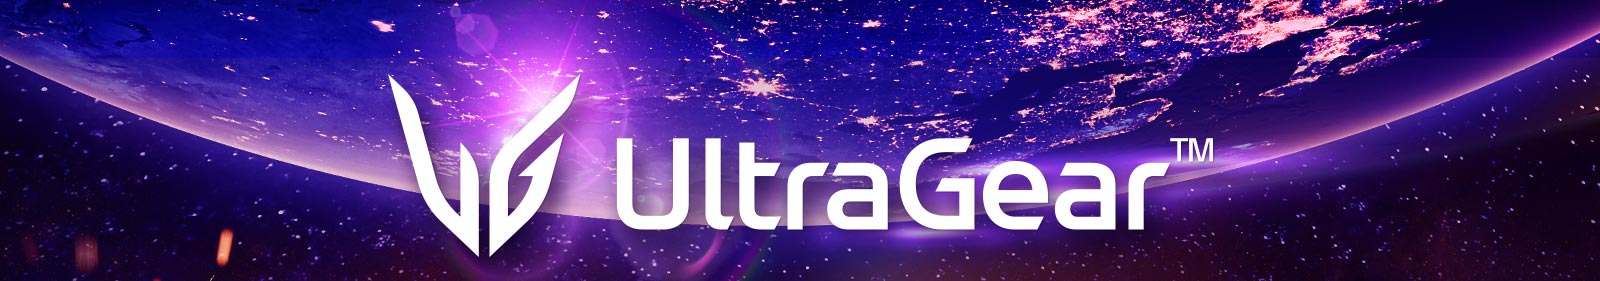 UltraGear™